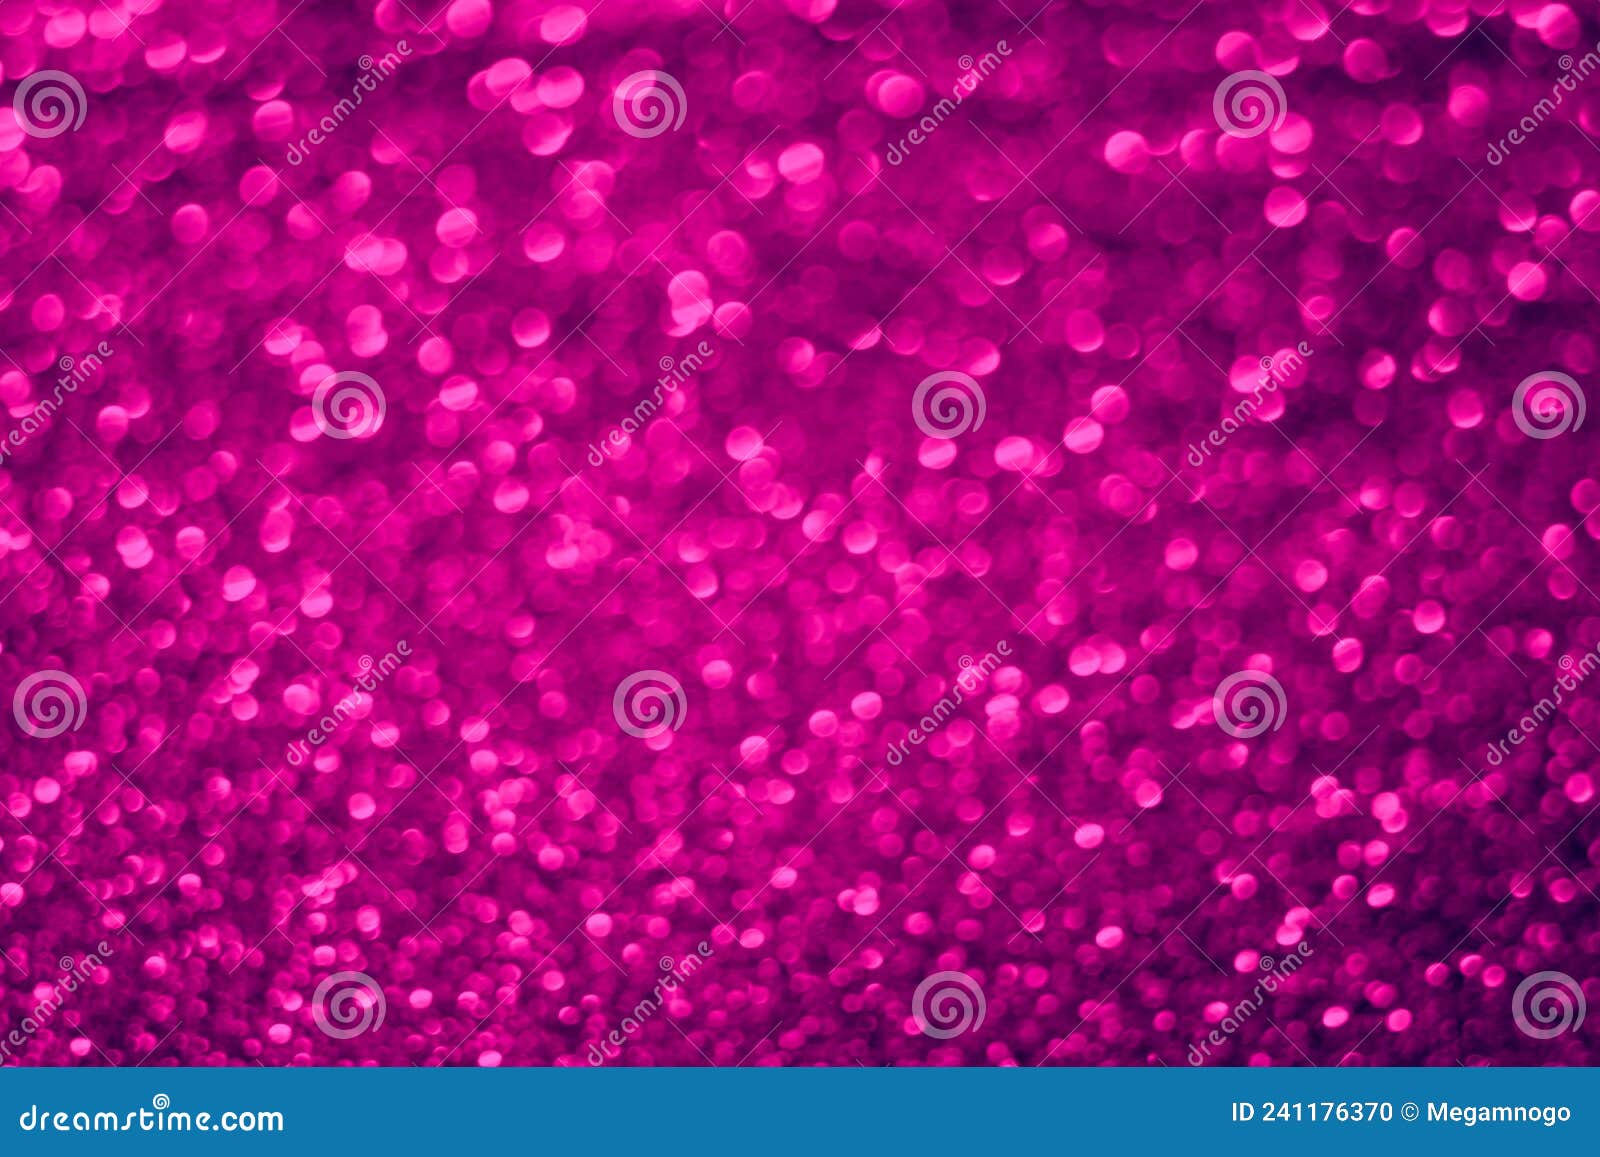 Magenta Glitter Shiny Background. Pink Sparkles Texture Stock Photo ...